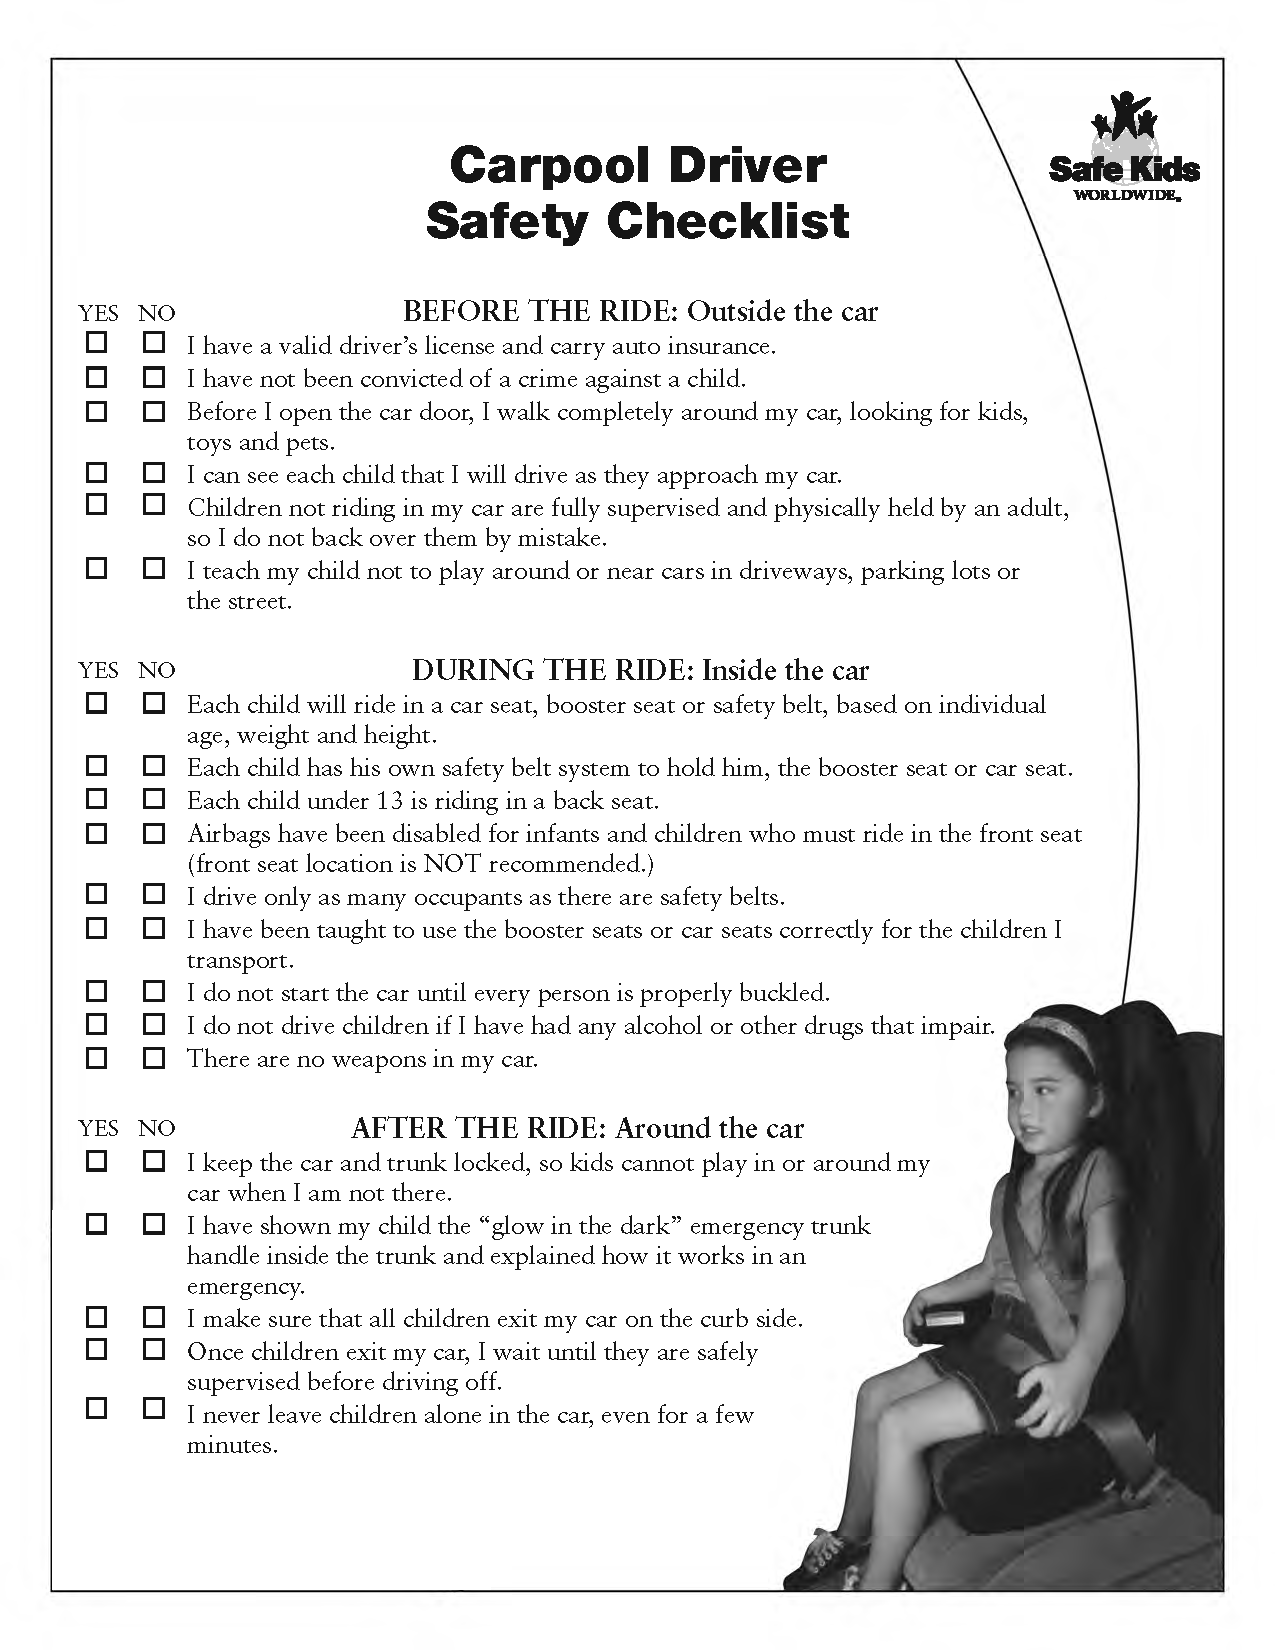 Carpool Driver Safety Checklist detail image